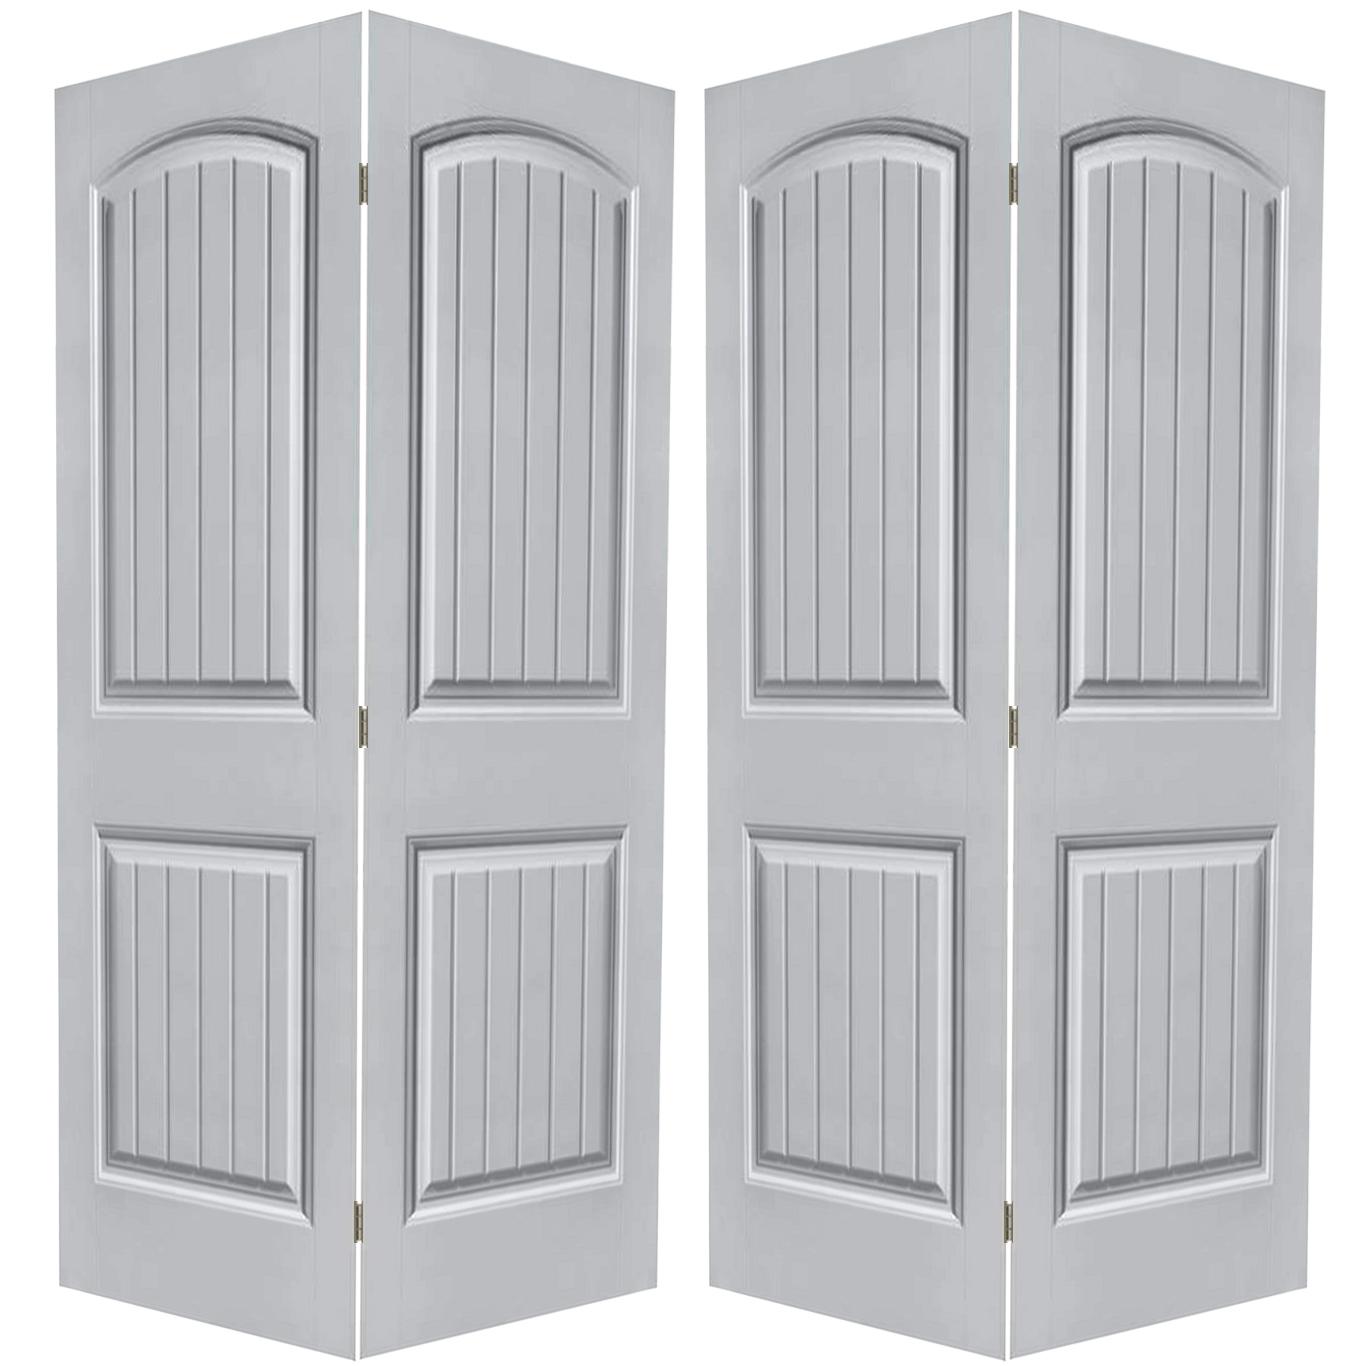 Masonite Select Cheyenne 2 Panel Arch Top 4 Door Bifold